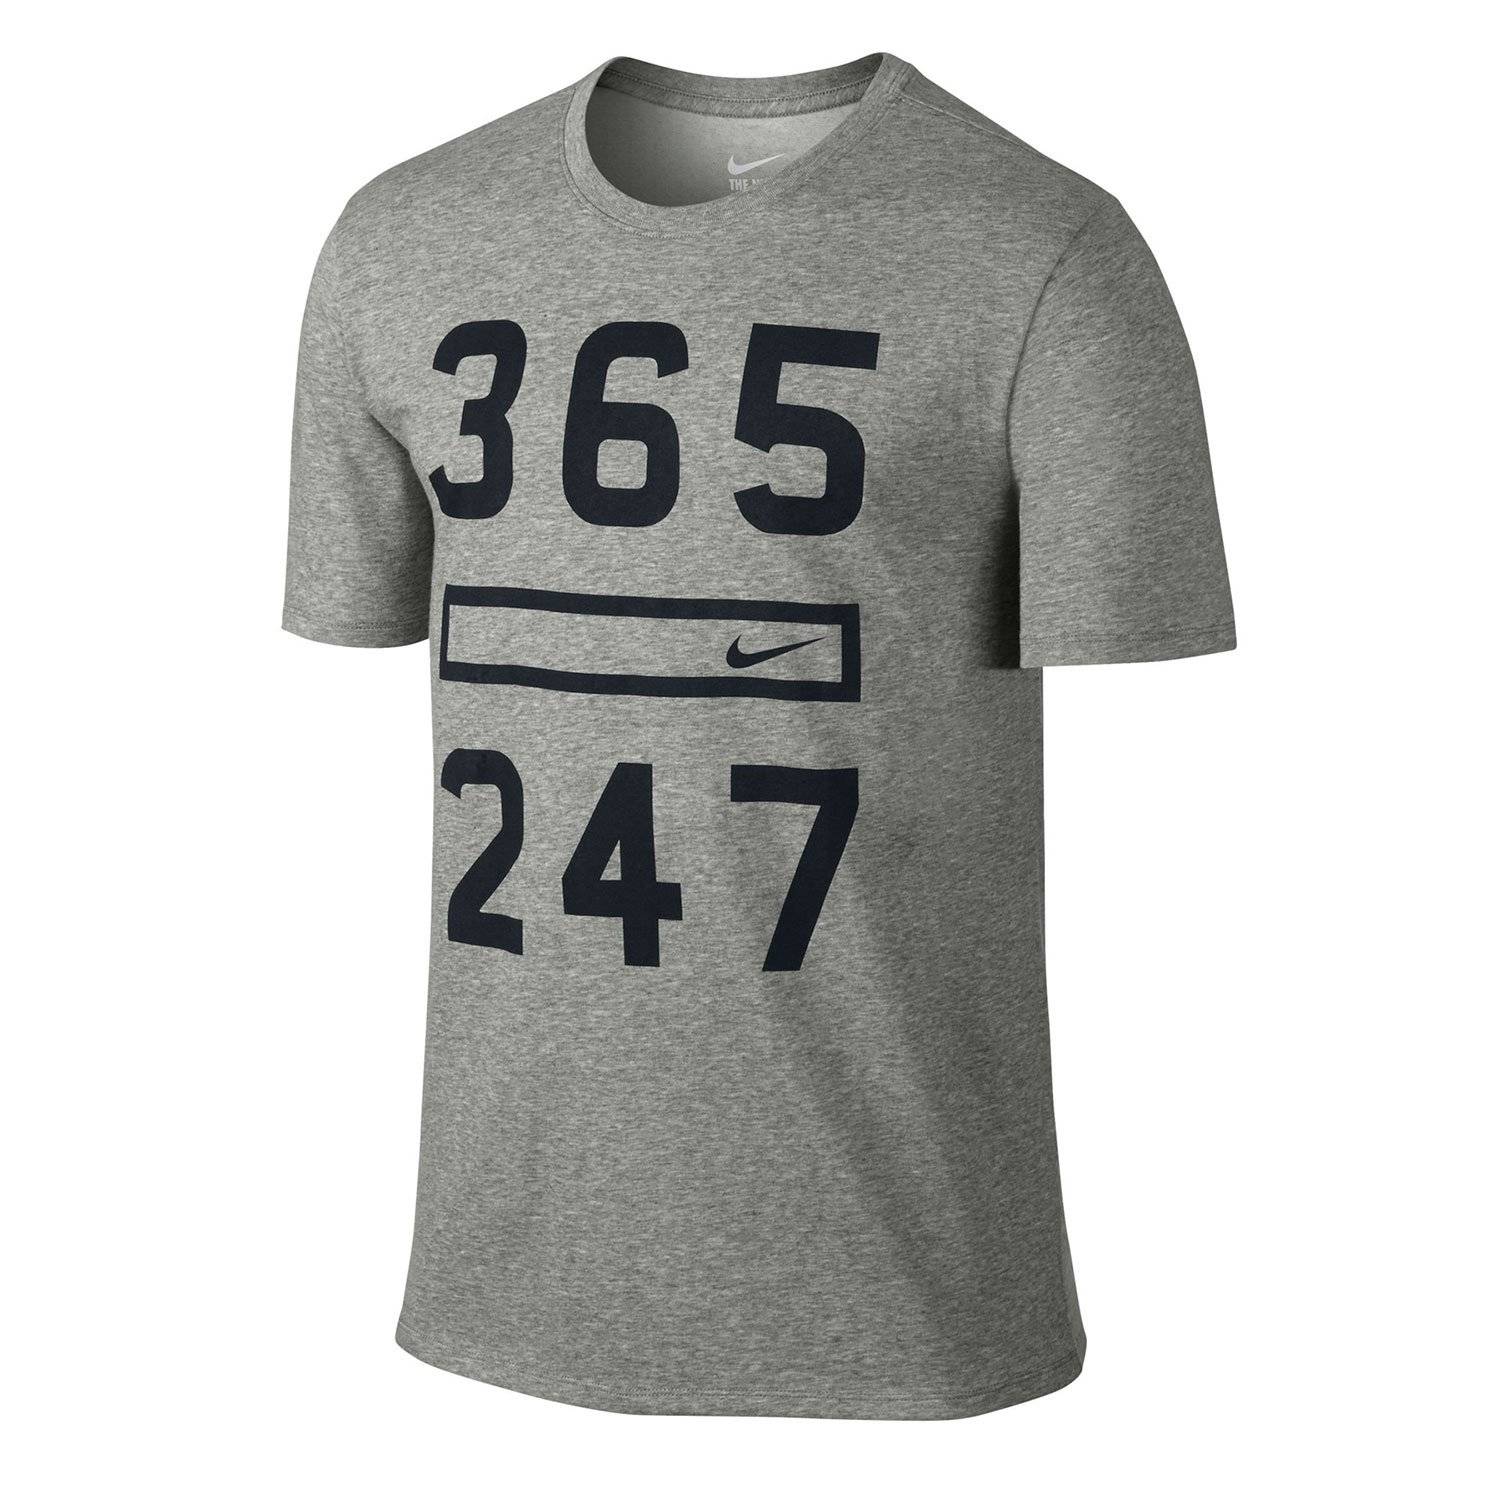 Nike Men's 365 24/7 T-Shirt